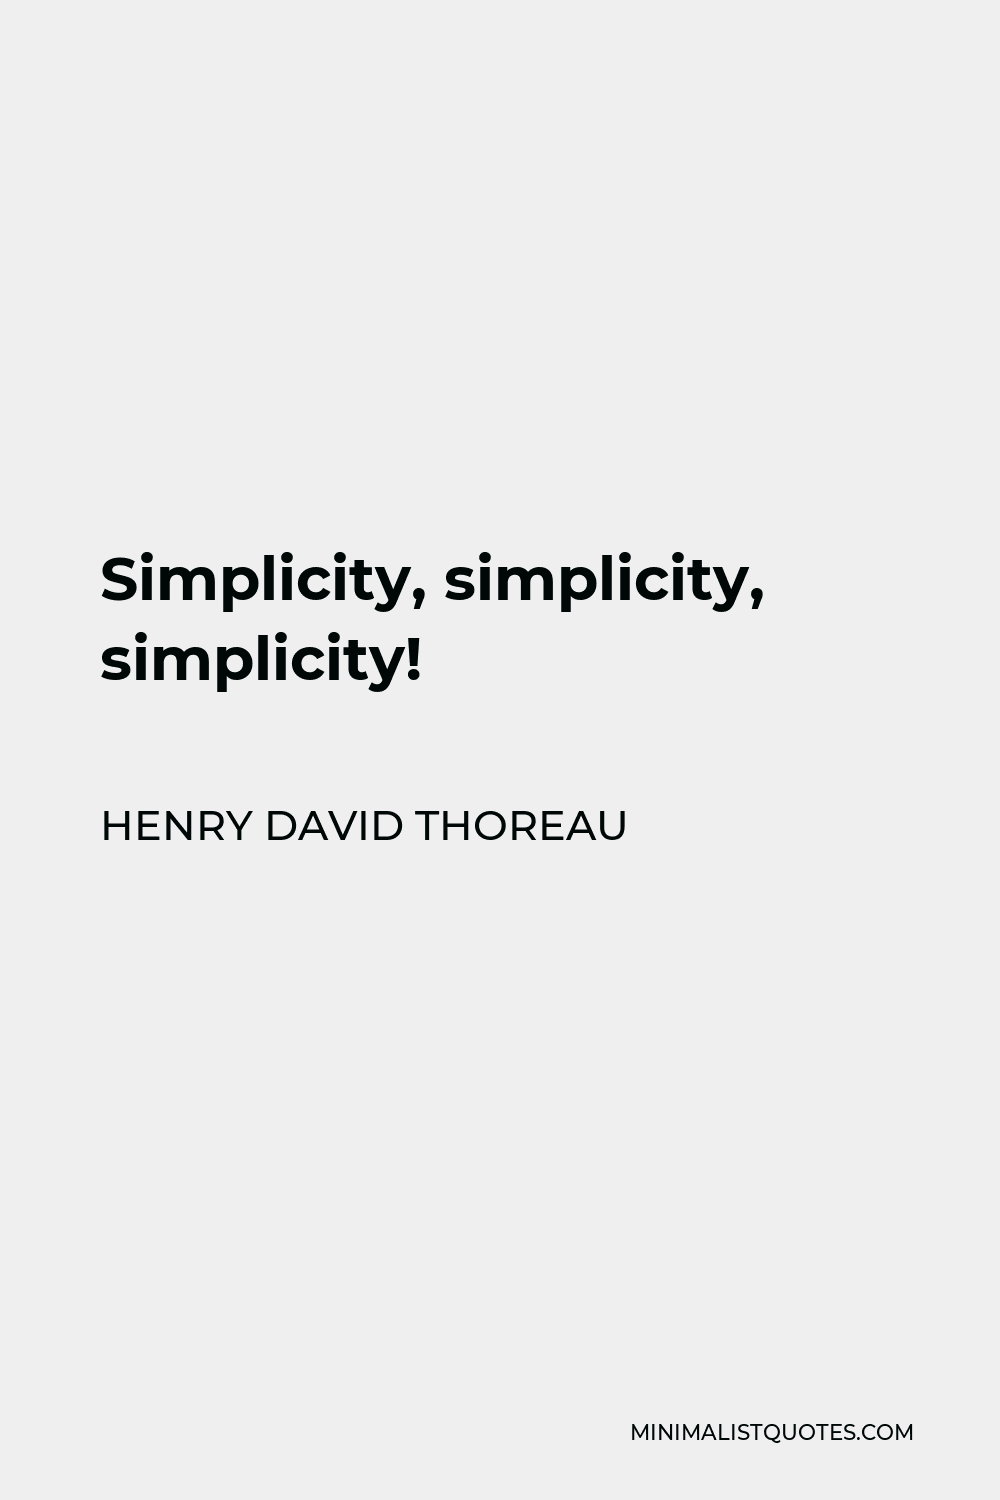 Henry David Thoreau Quote - Simplicity, simplicity, simplicity!